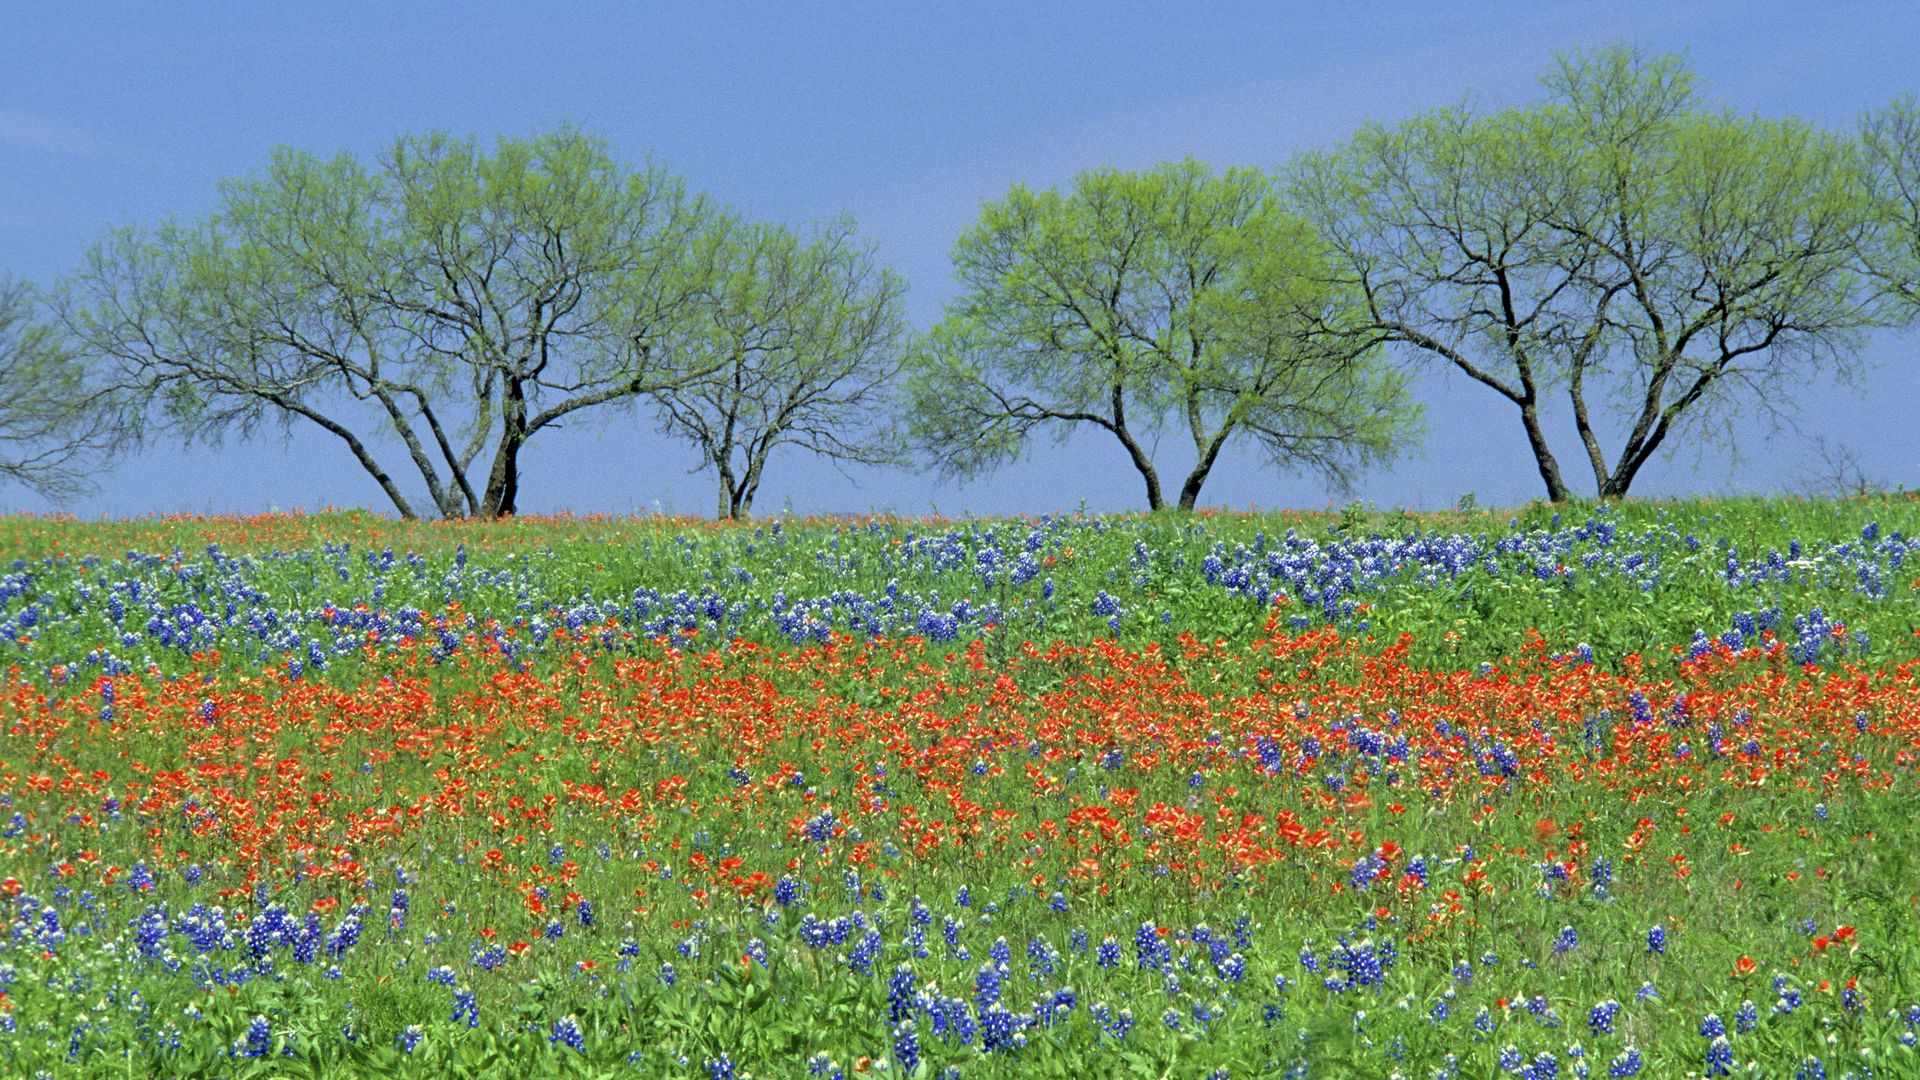 A field of wildflowers in Texas